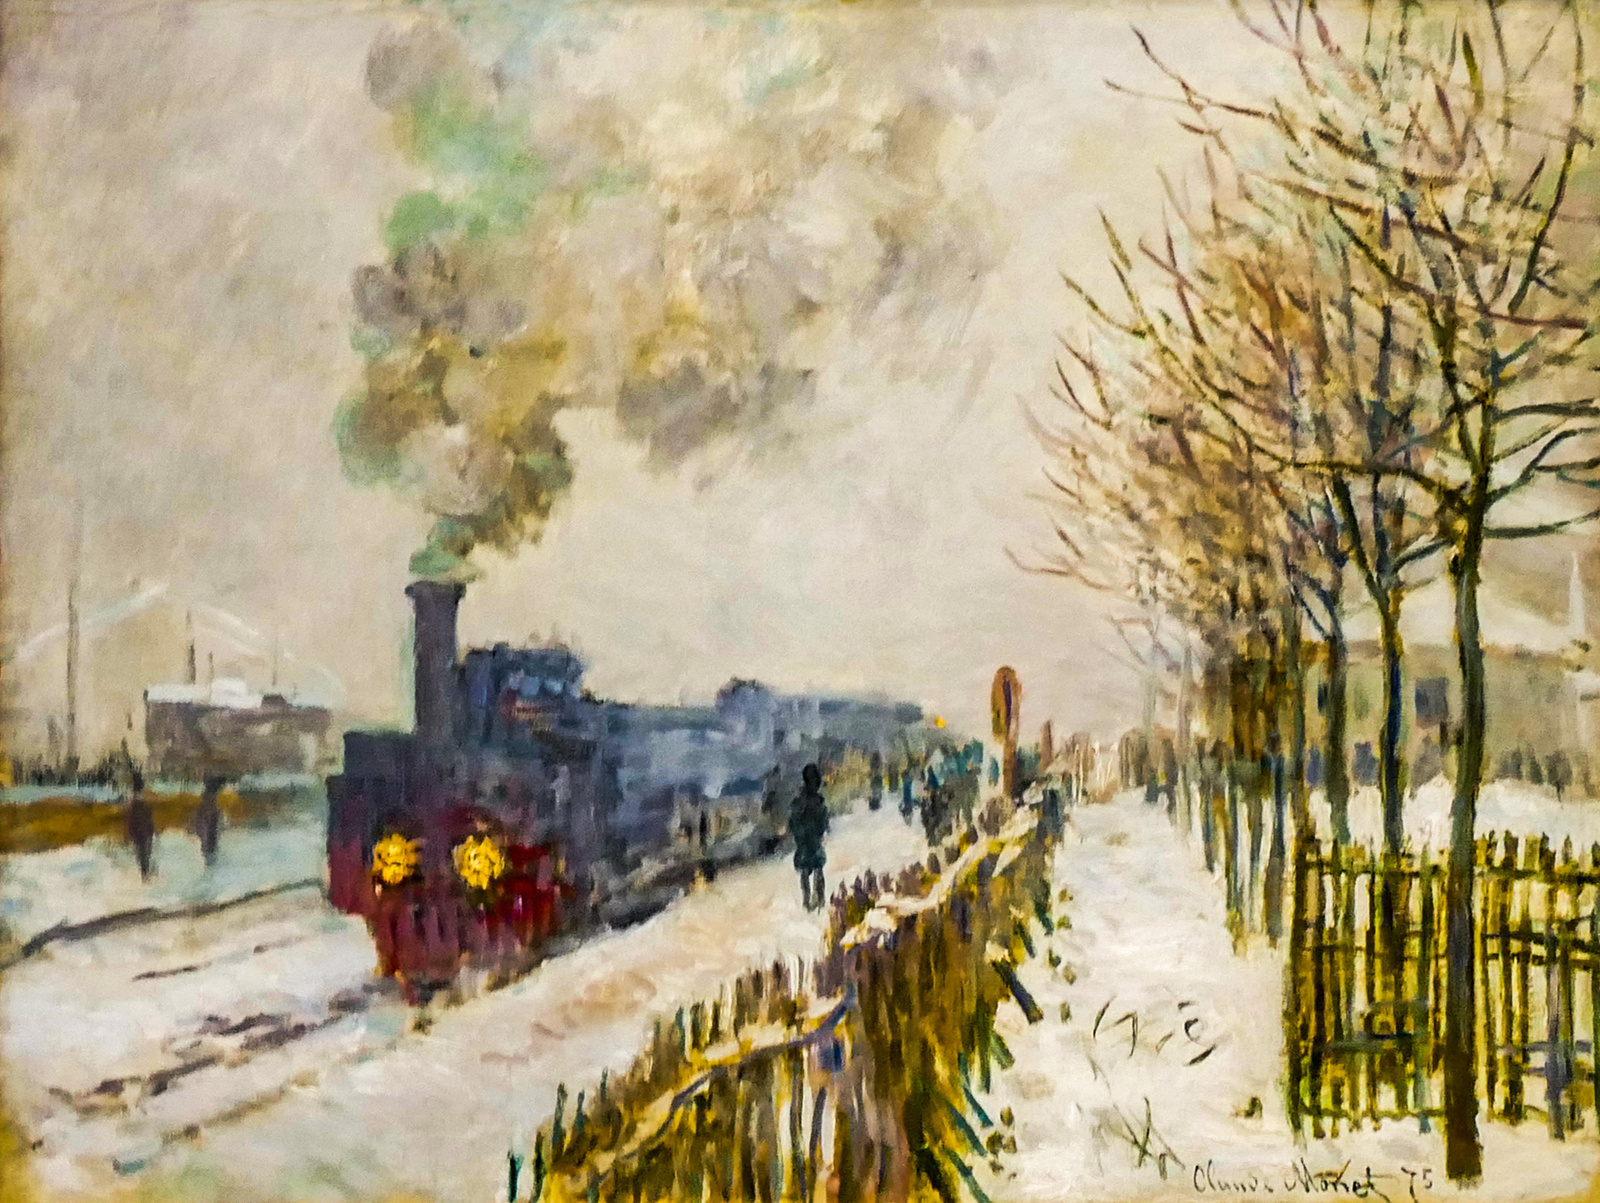 Bécs Claude Monet - Train Engine in the snow (1875)